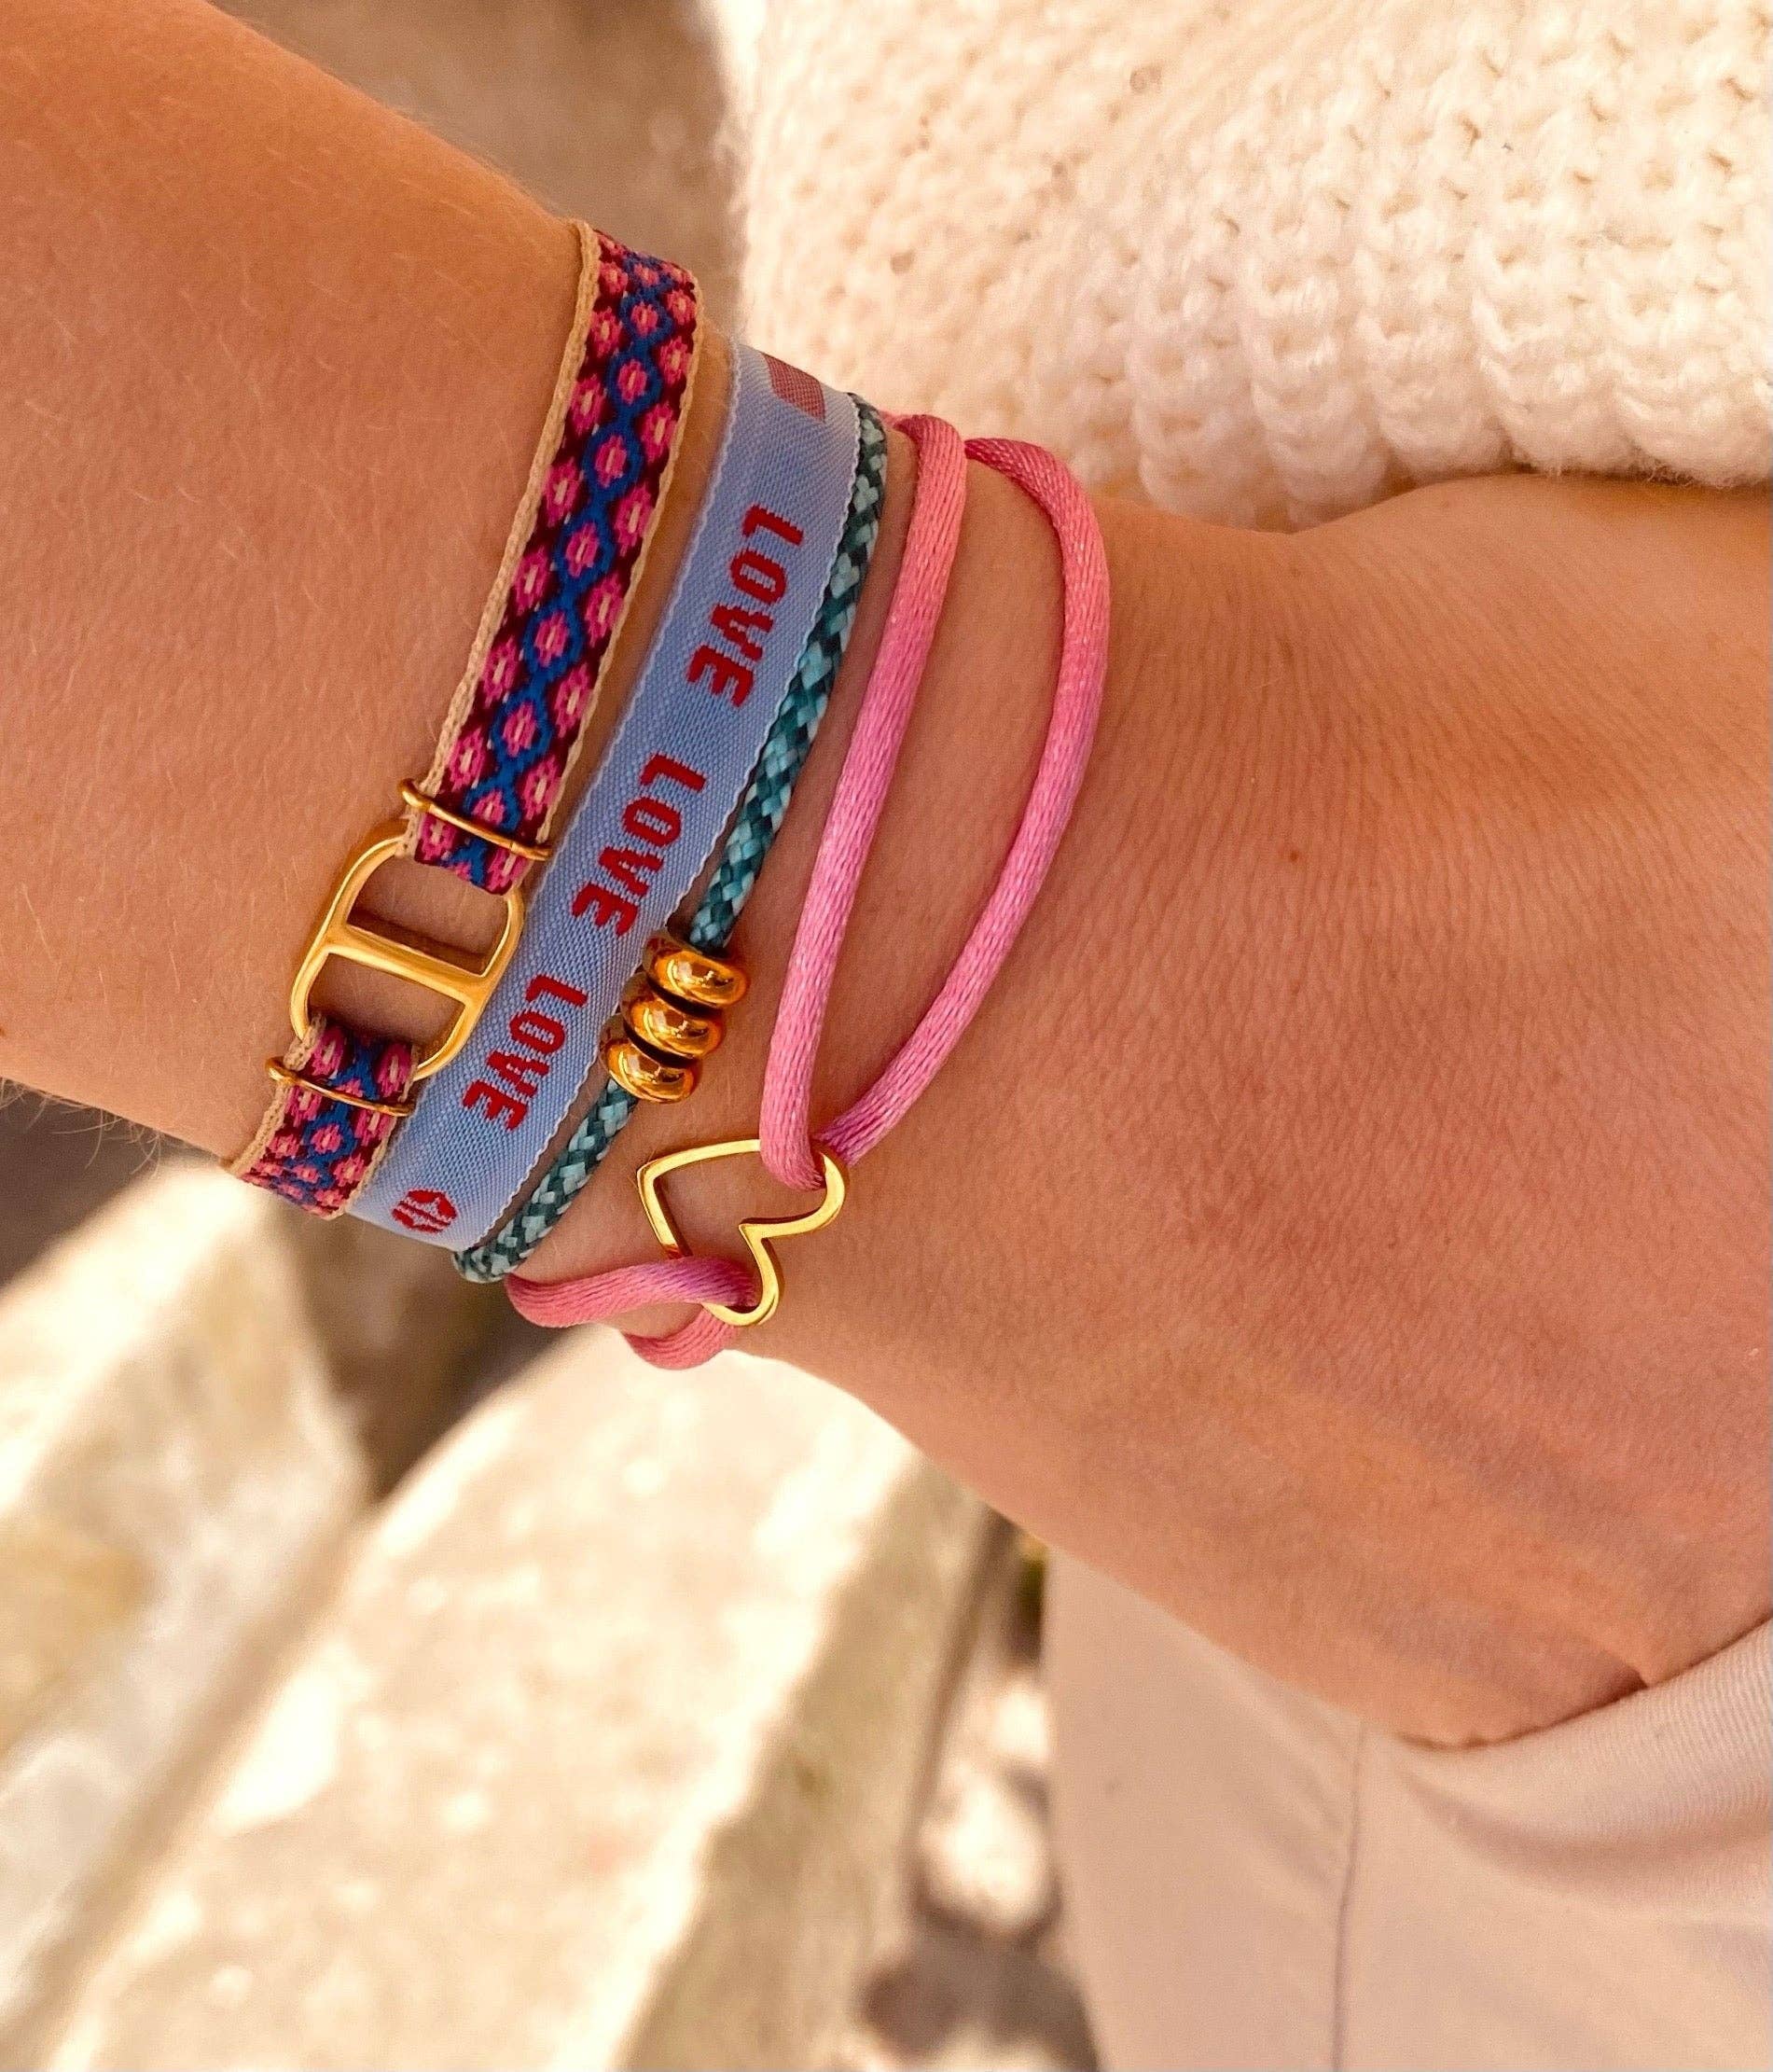 Custom show stickers - make the friendship bracelets! 💜✨ : r/SwiftieMerch